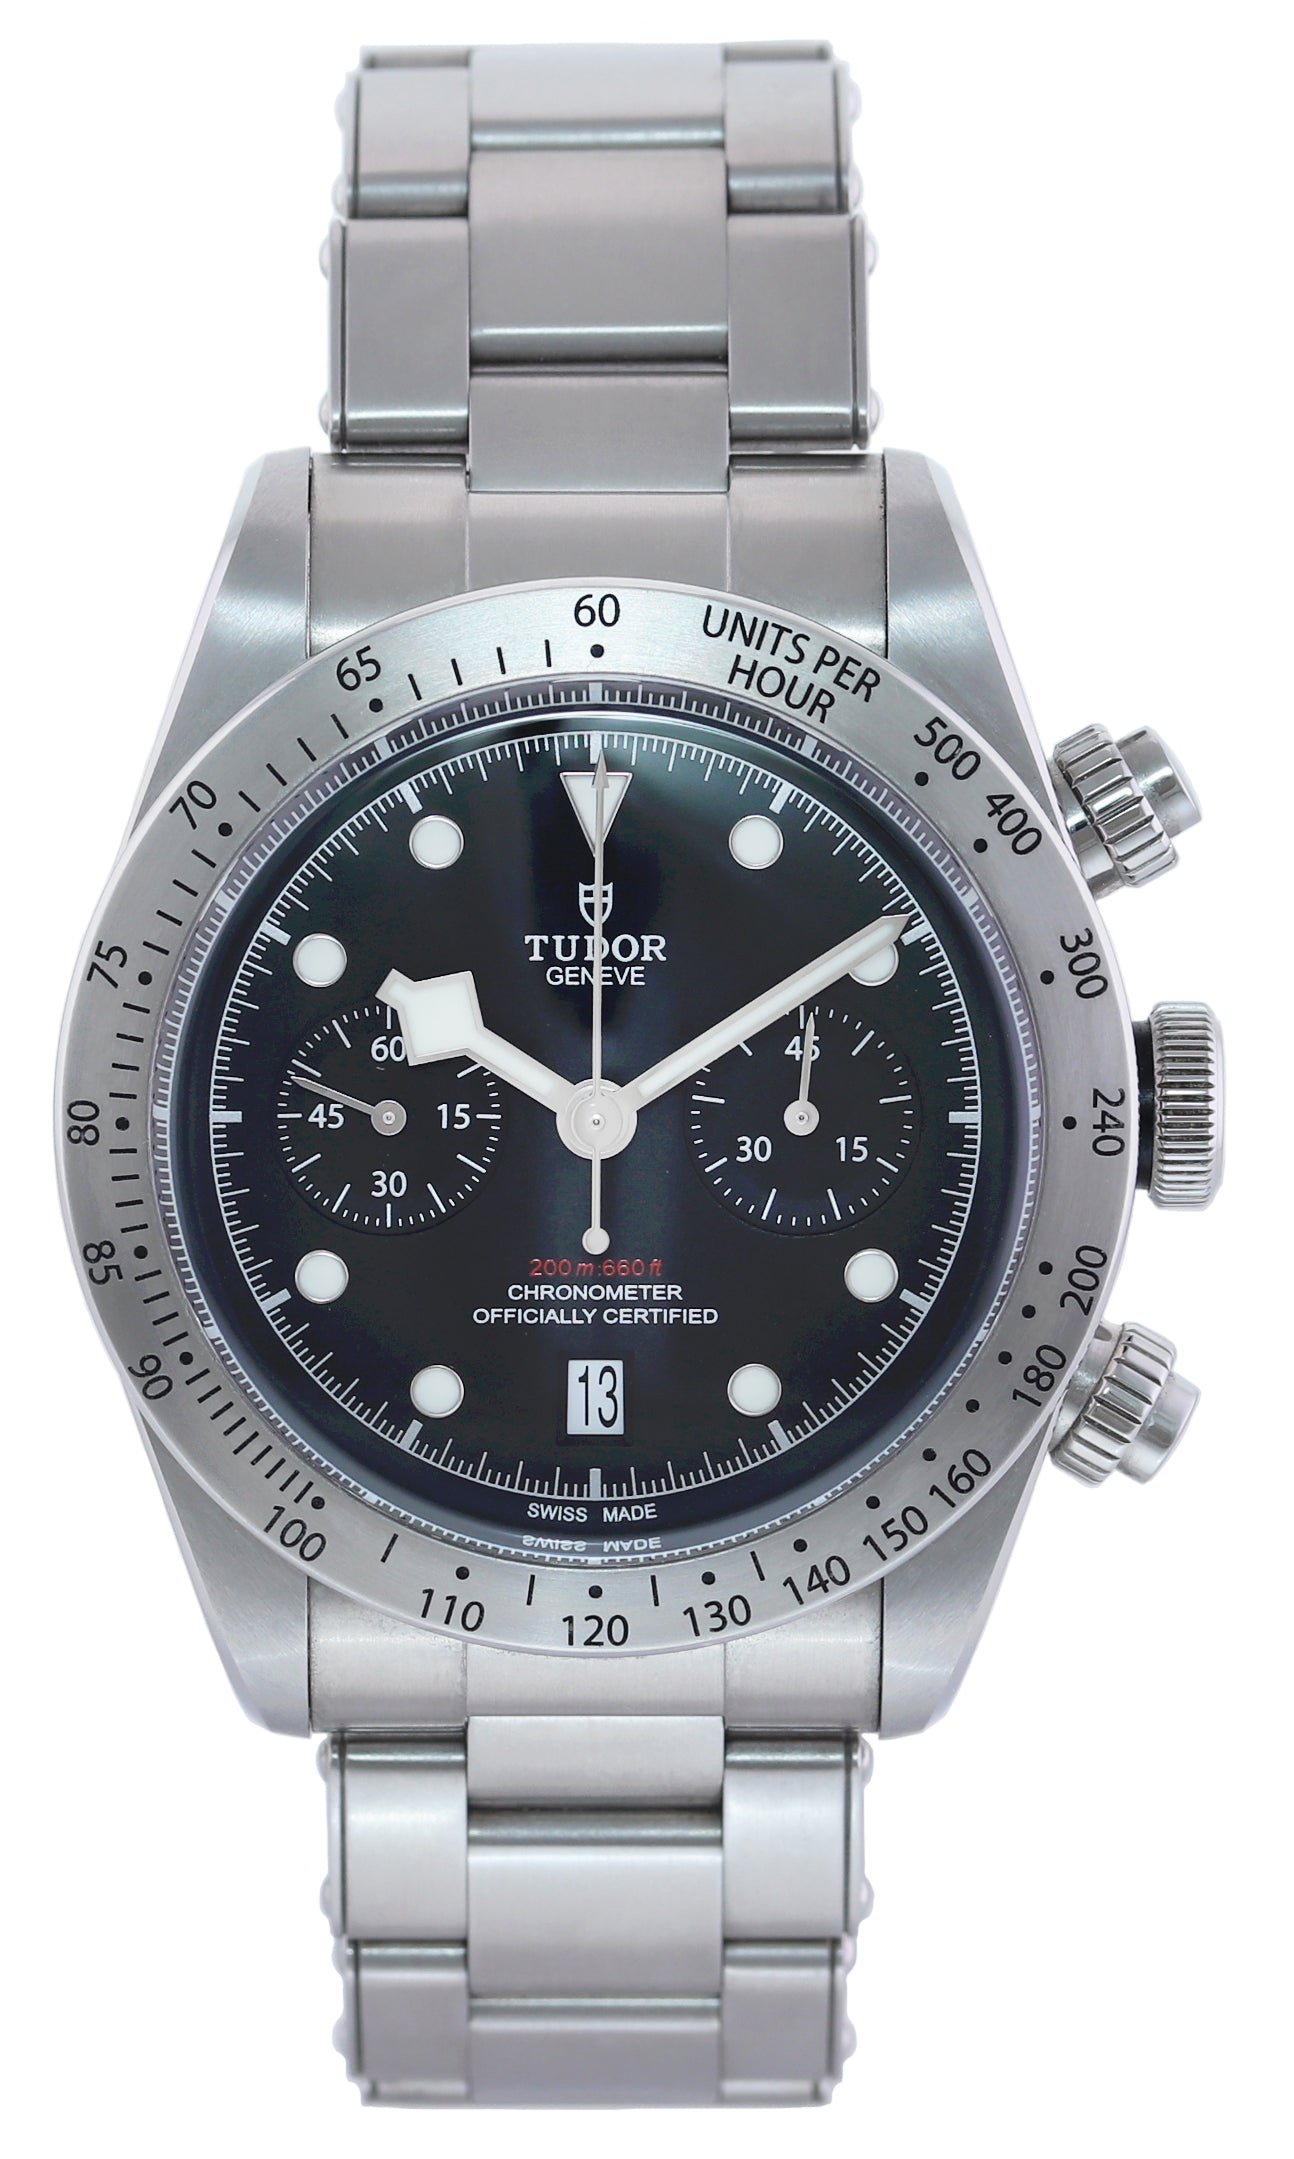 2017 MINT Tudor Heritage Black Bay Chronograph 79350 Black Dial Steel 41mm Watch